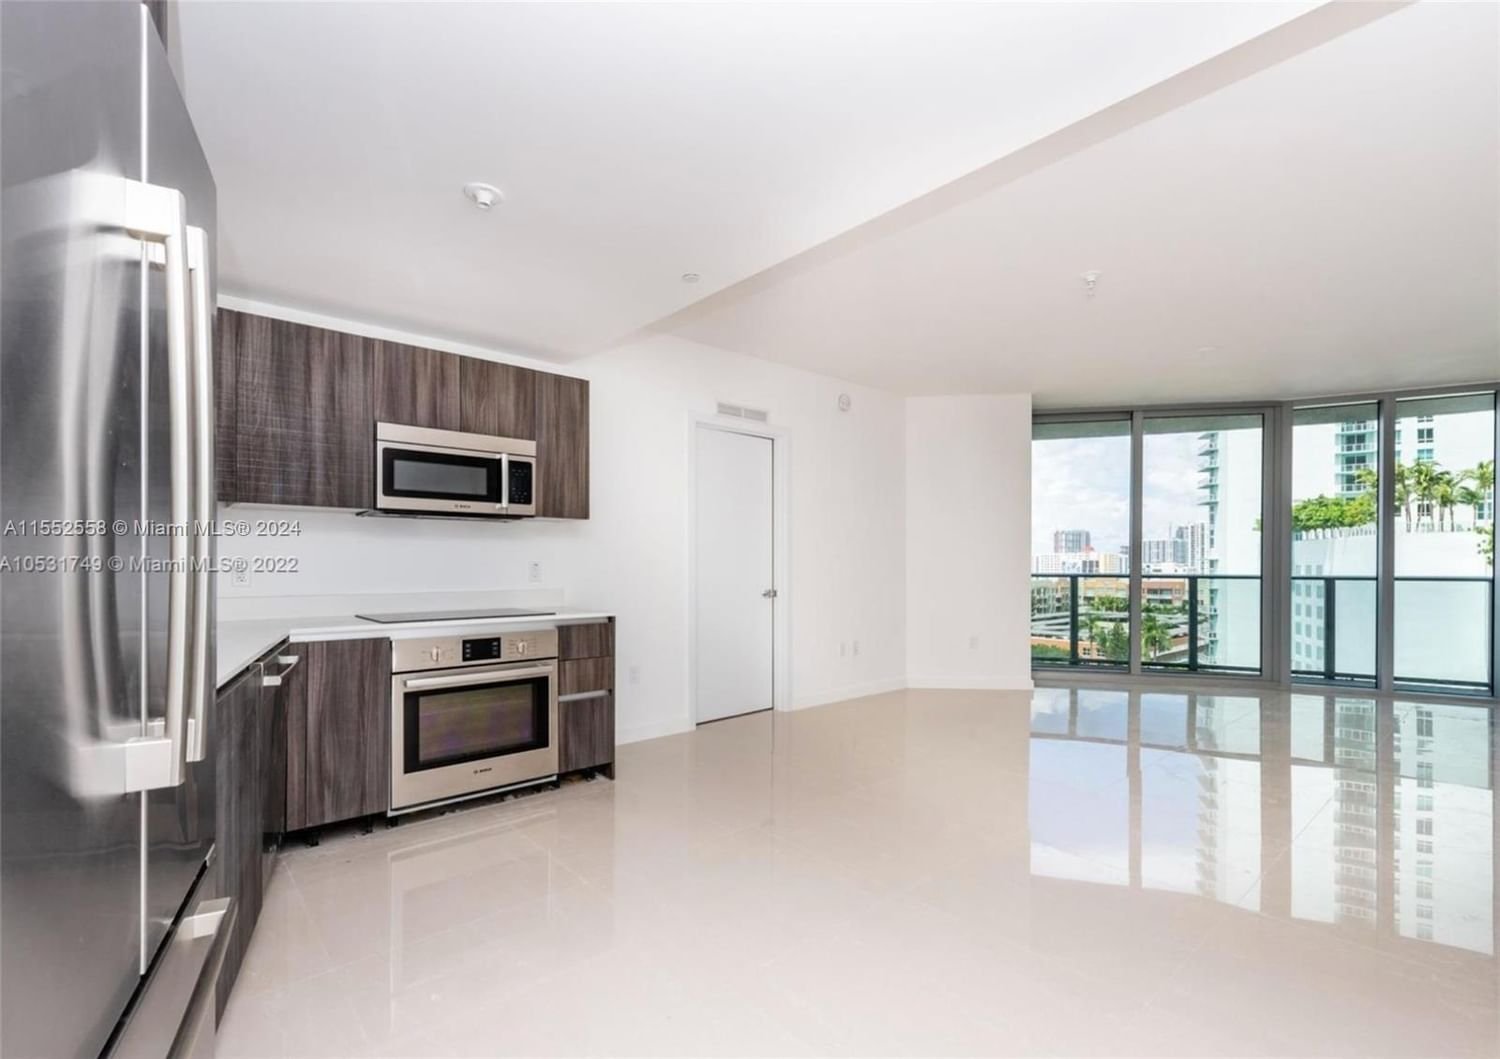 Real estate property located at 488 18th St #1001, Miami-Dade County, ARIA ON THE BAY CONDO, Miami, FL